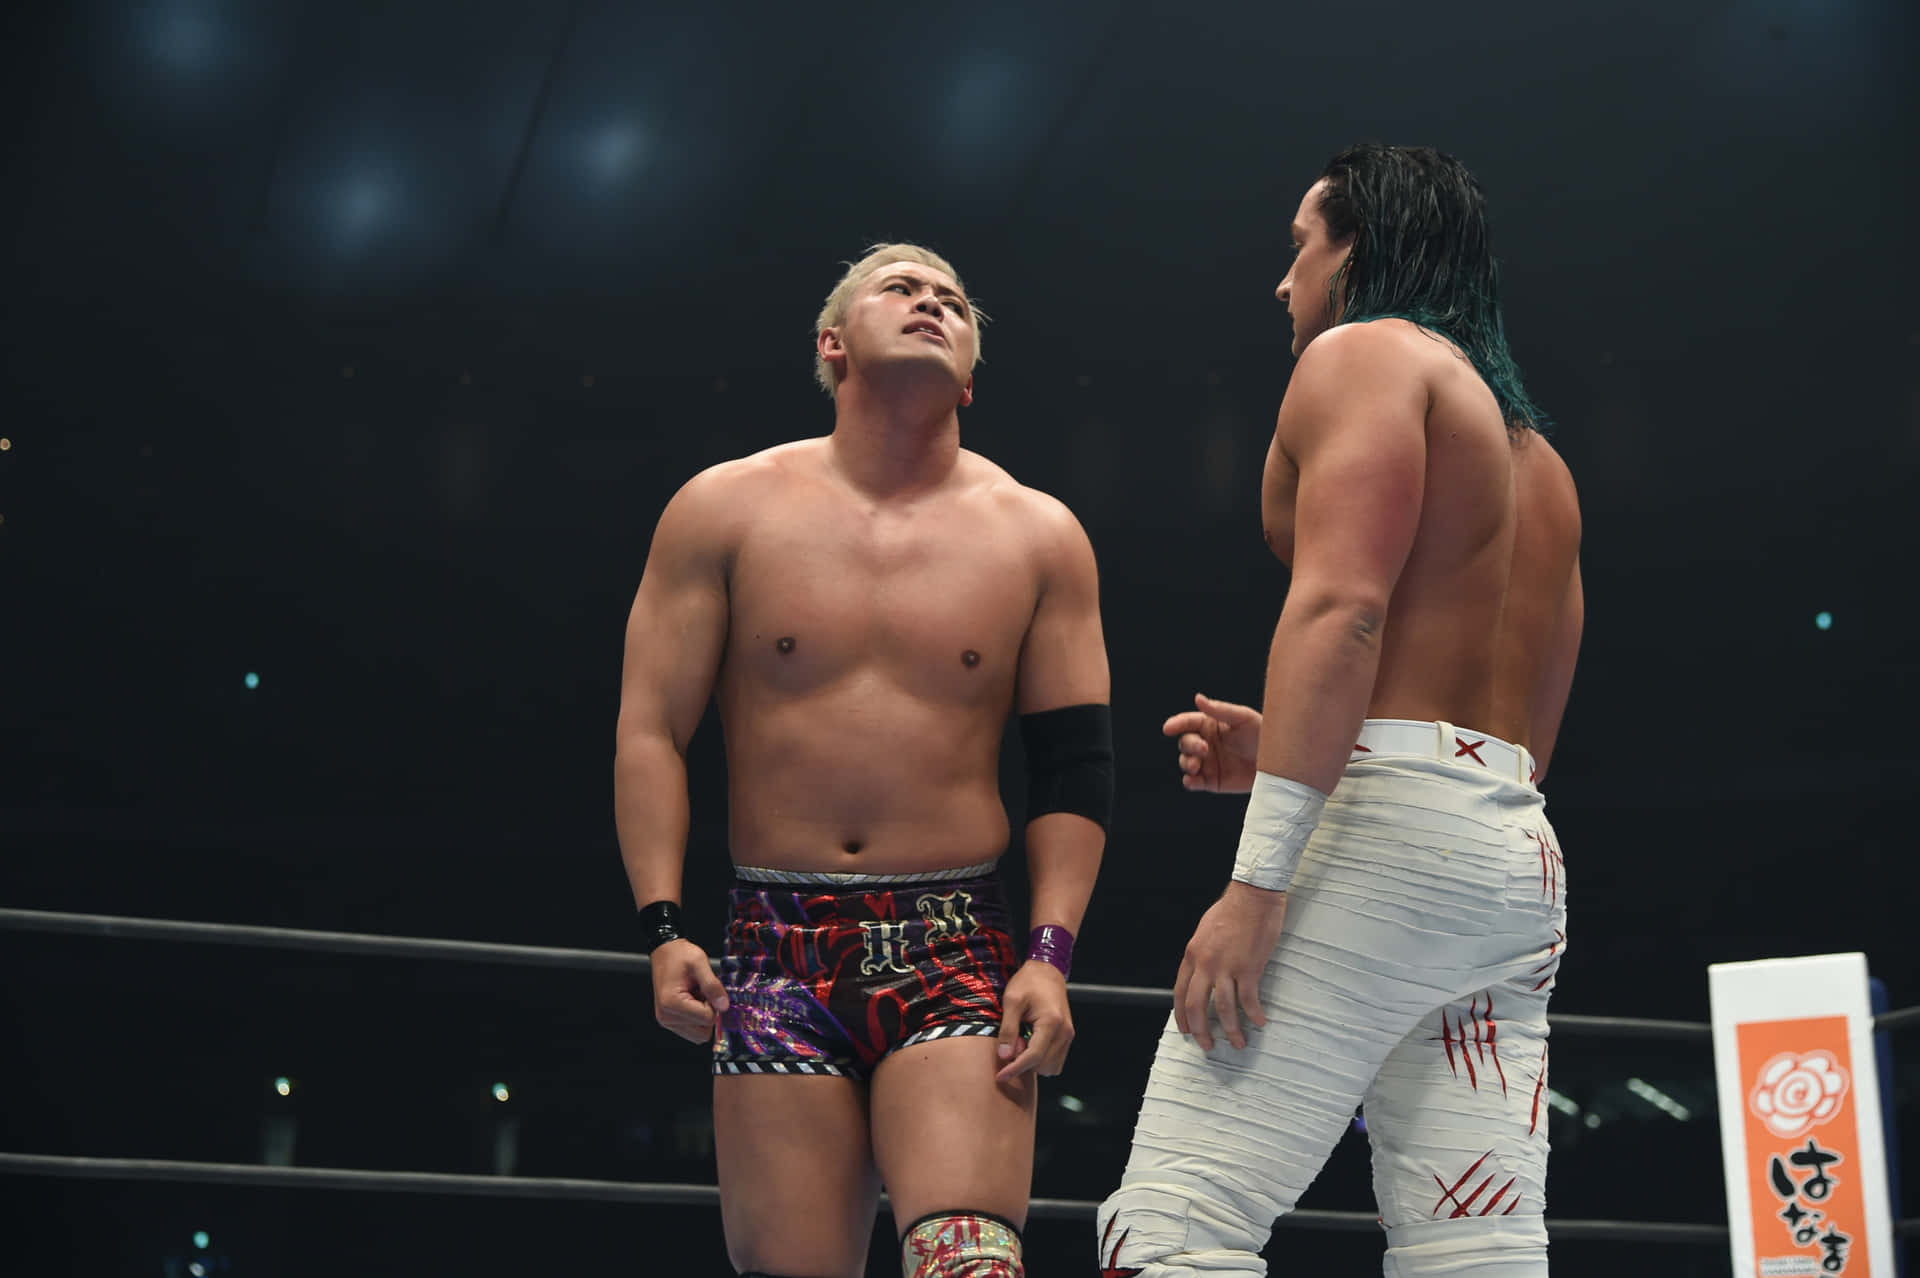 Kazuchikaokada Affronta Jay White In Un Intenso Match Di Wrestling. Sfondo